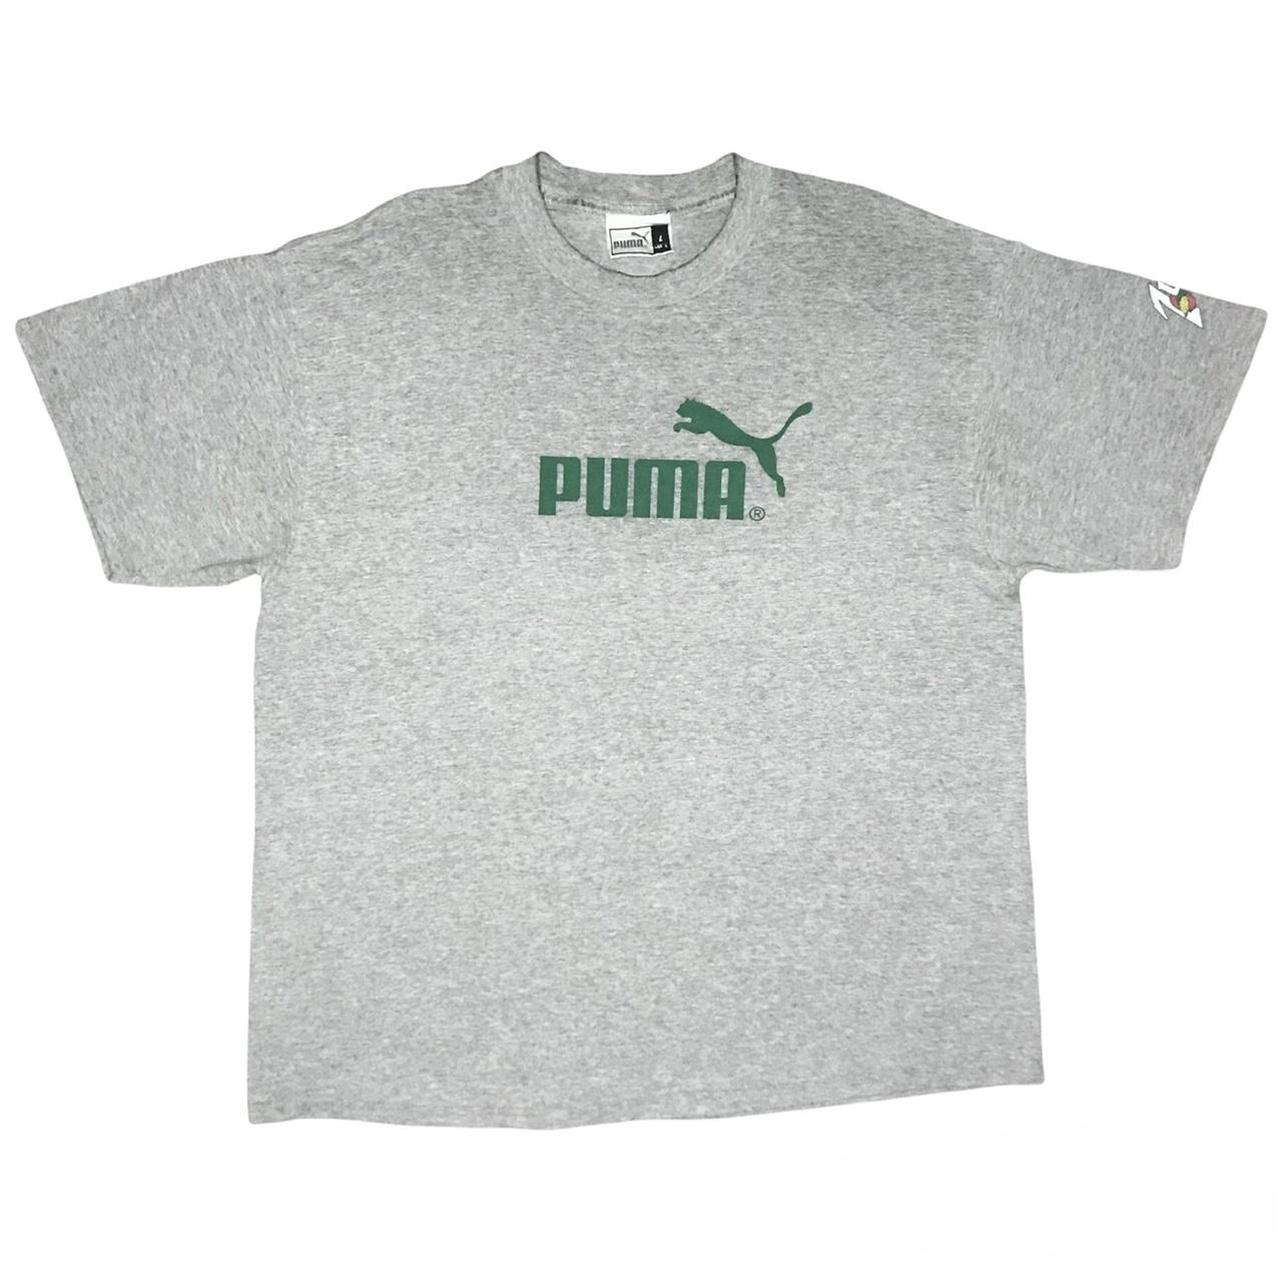 Vintage Puma T-Shirt Features logo & 7up sponsorship... - Depop